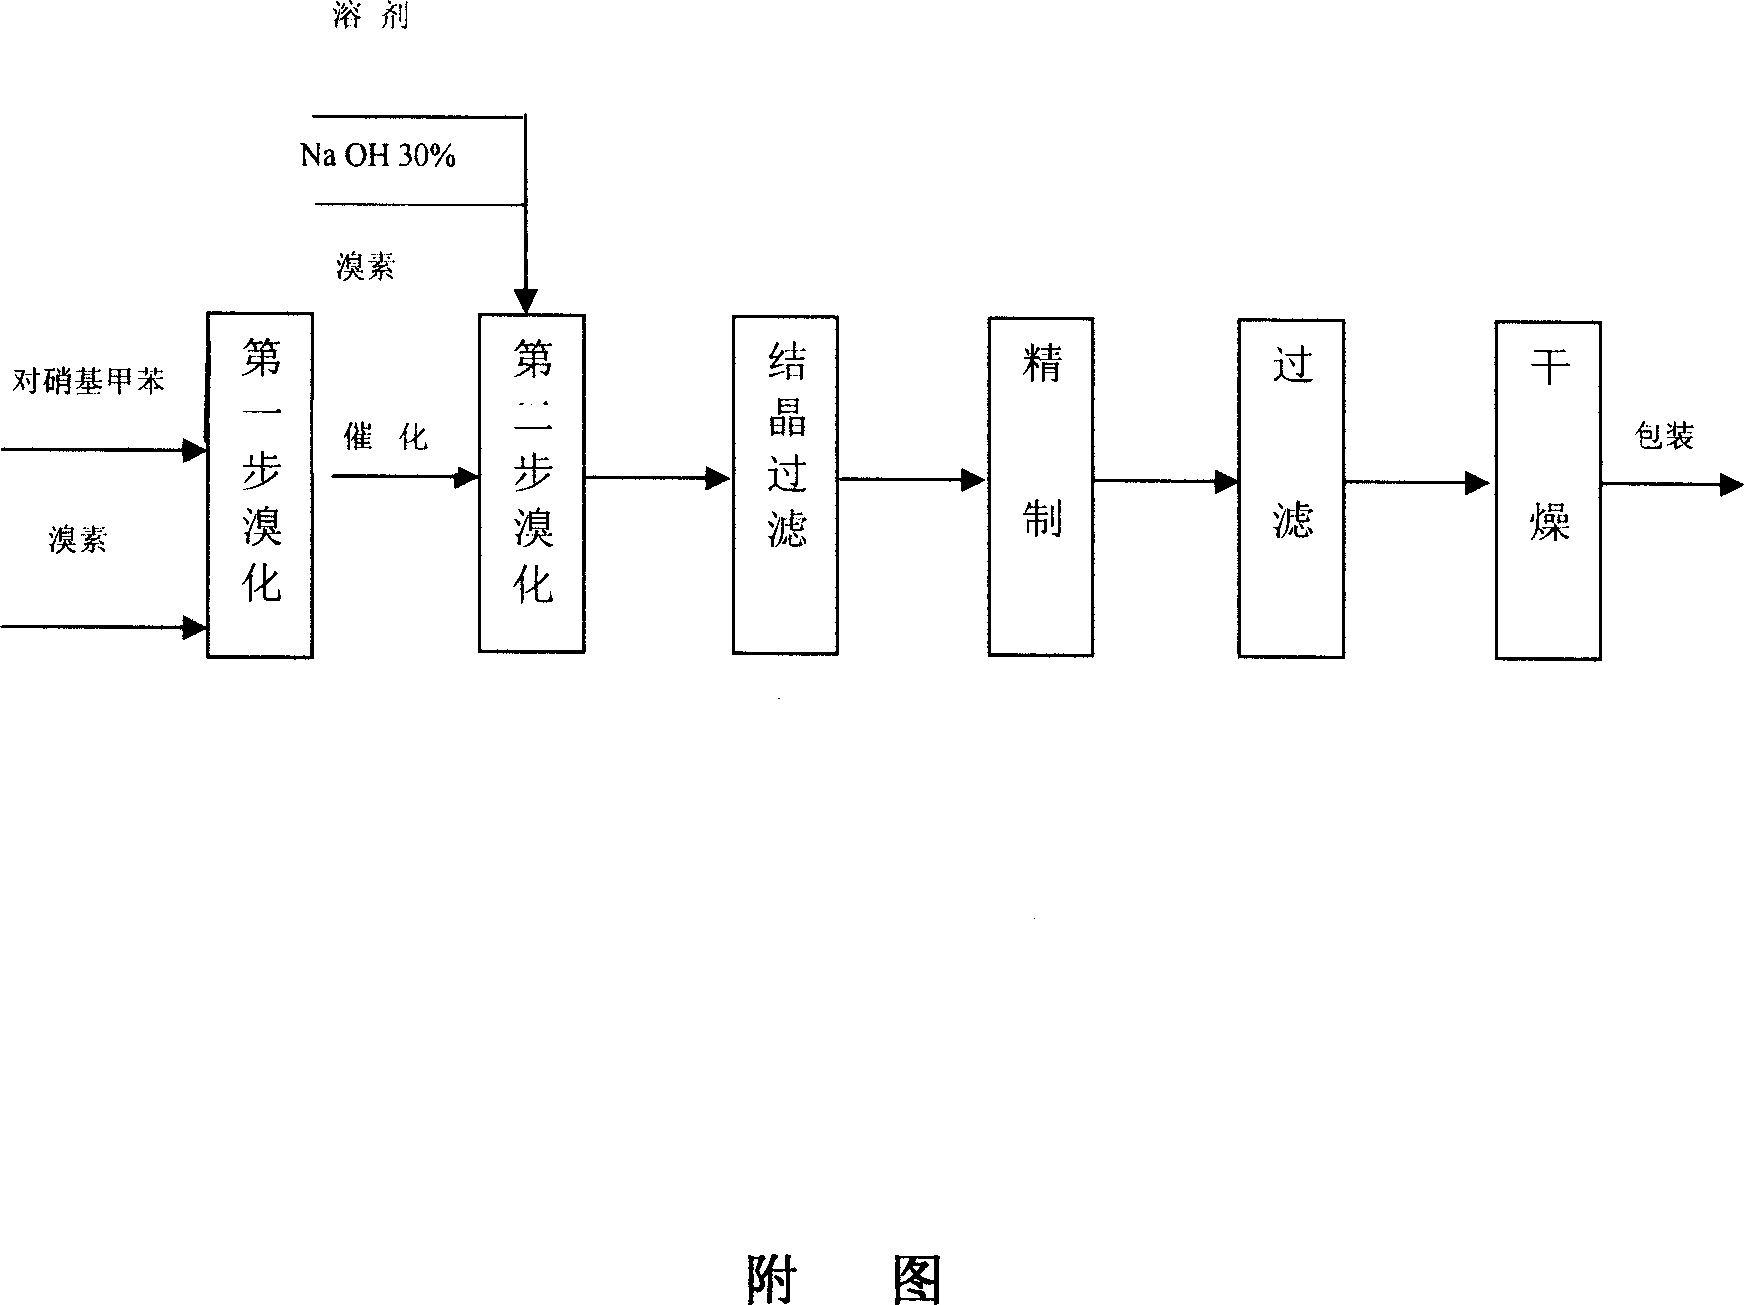 Synthetic process of para-nitrotribromotoluene